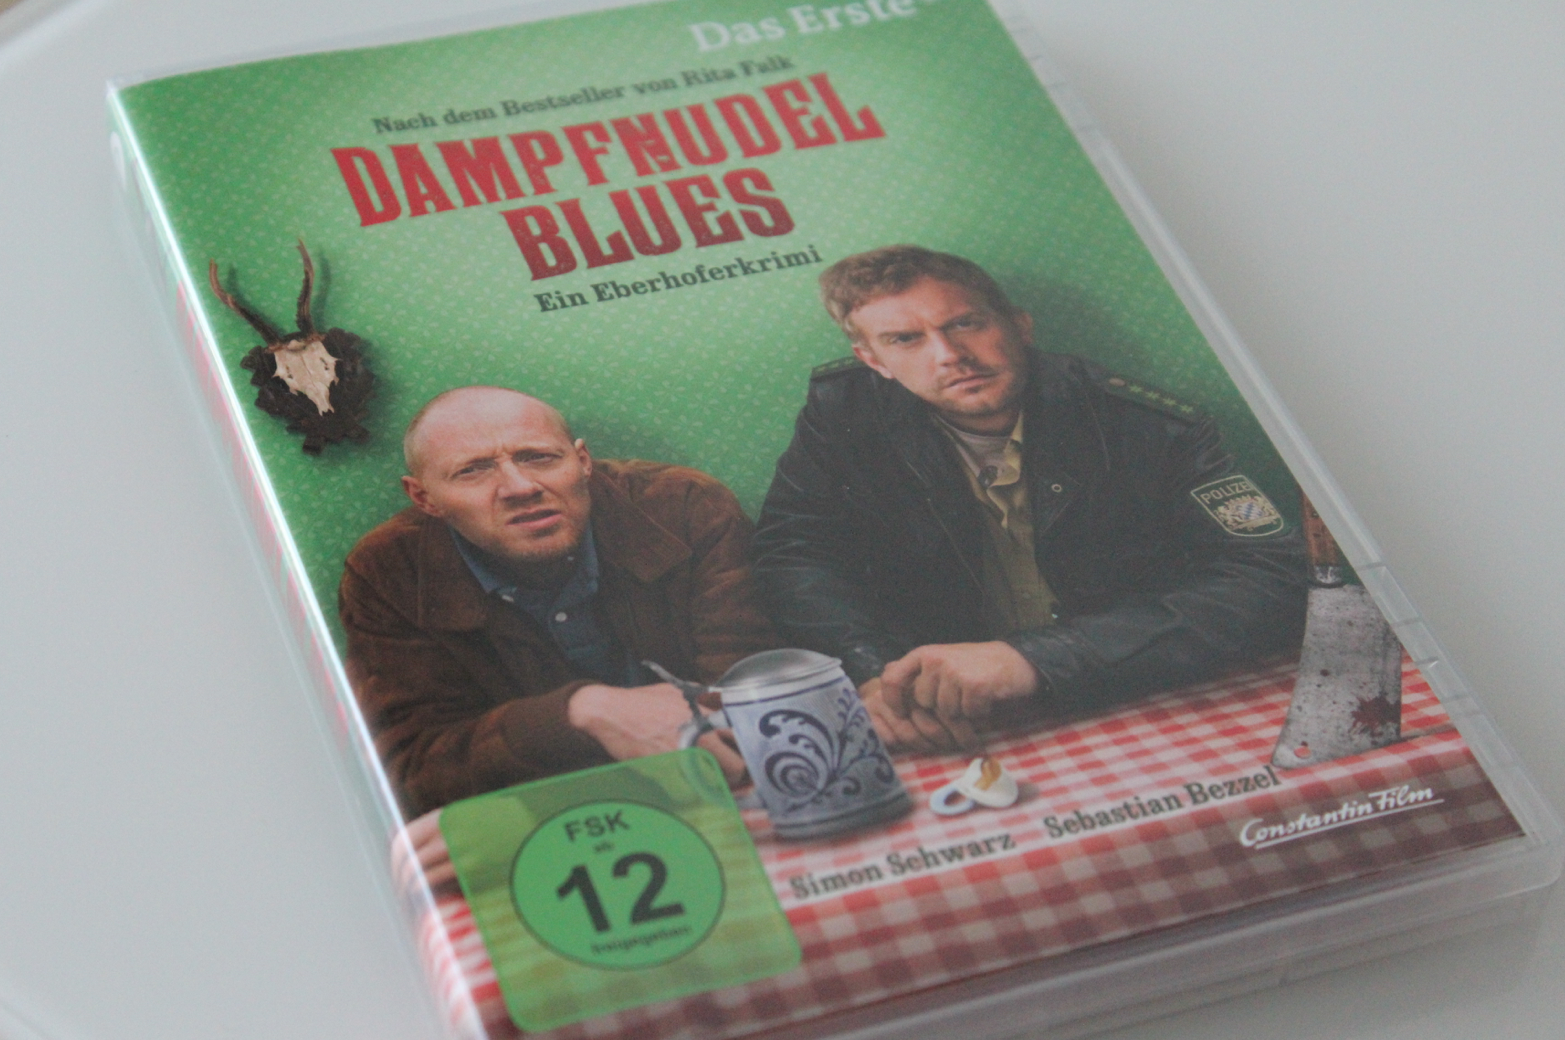 7 Dampfnudel Blues Dvd Rita Falk